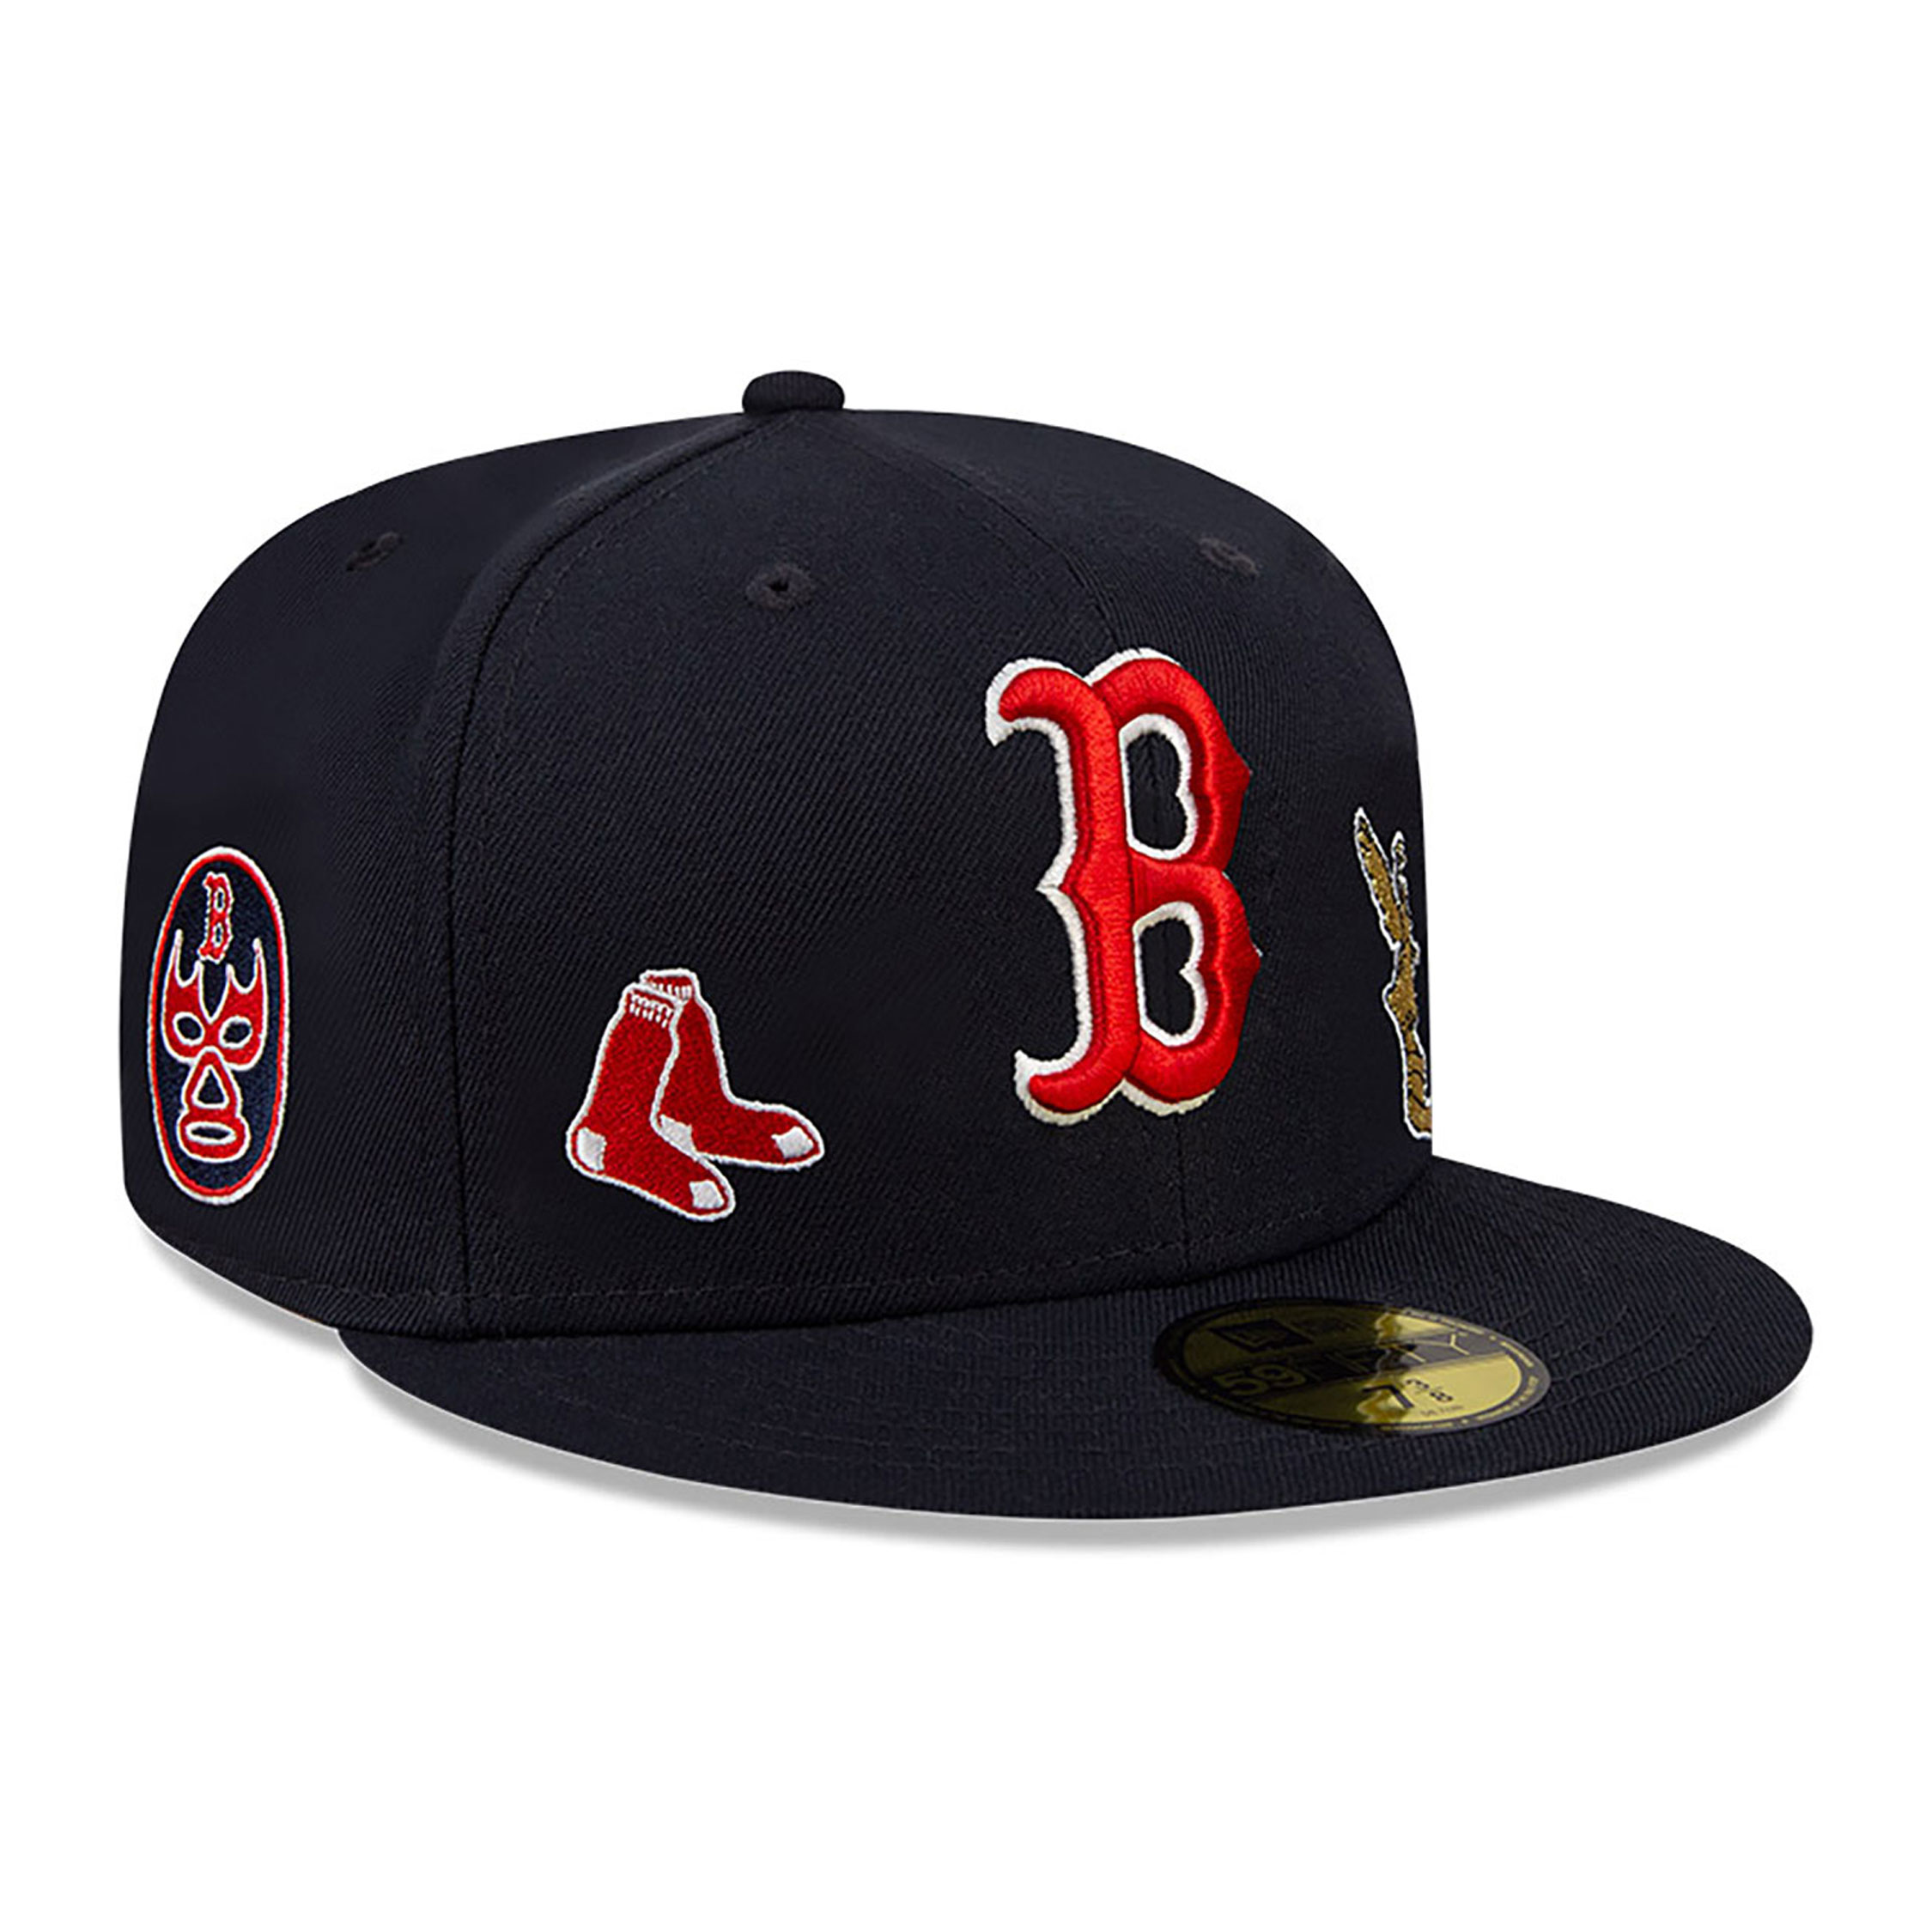 boston red sox city hat